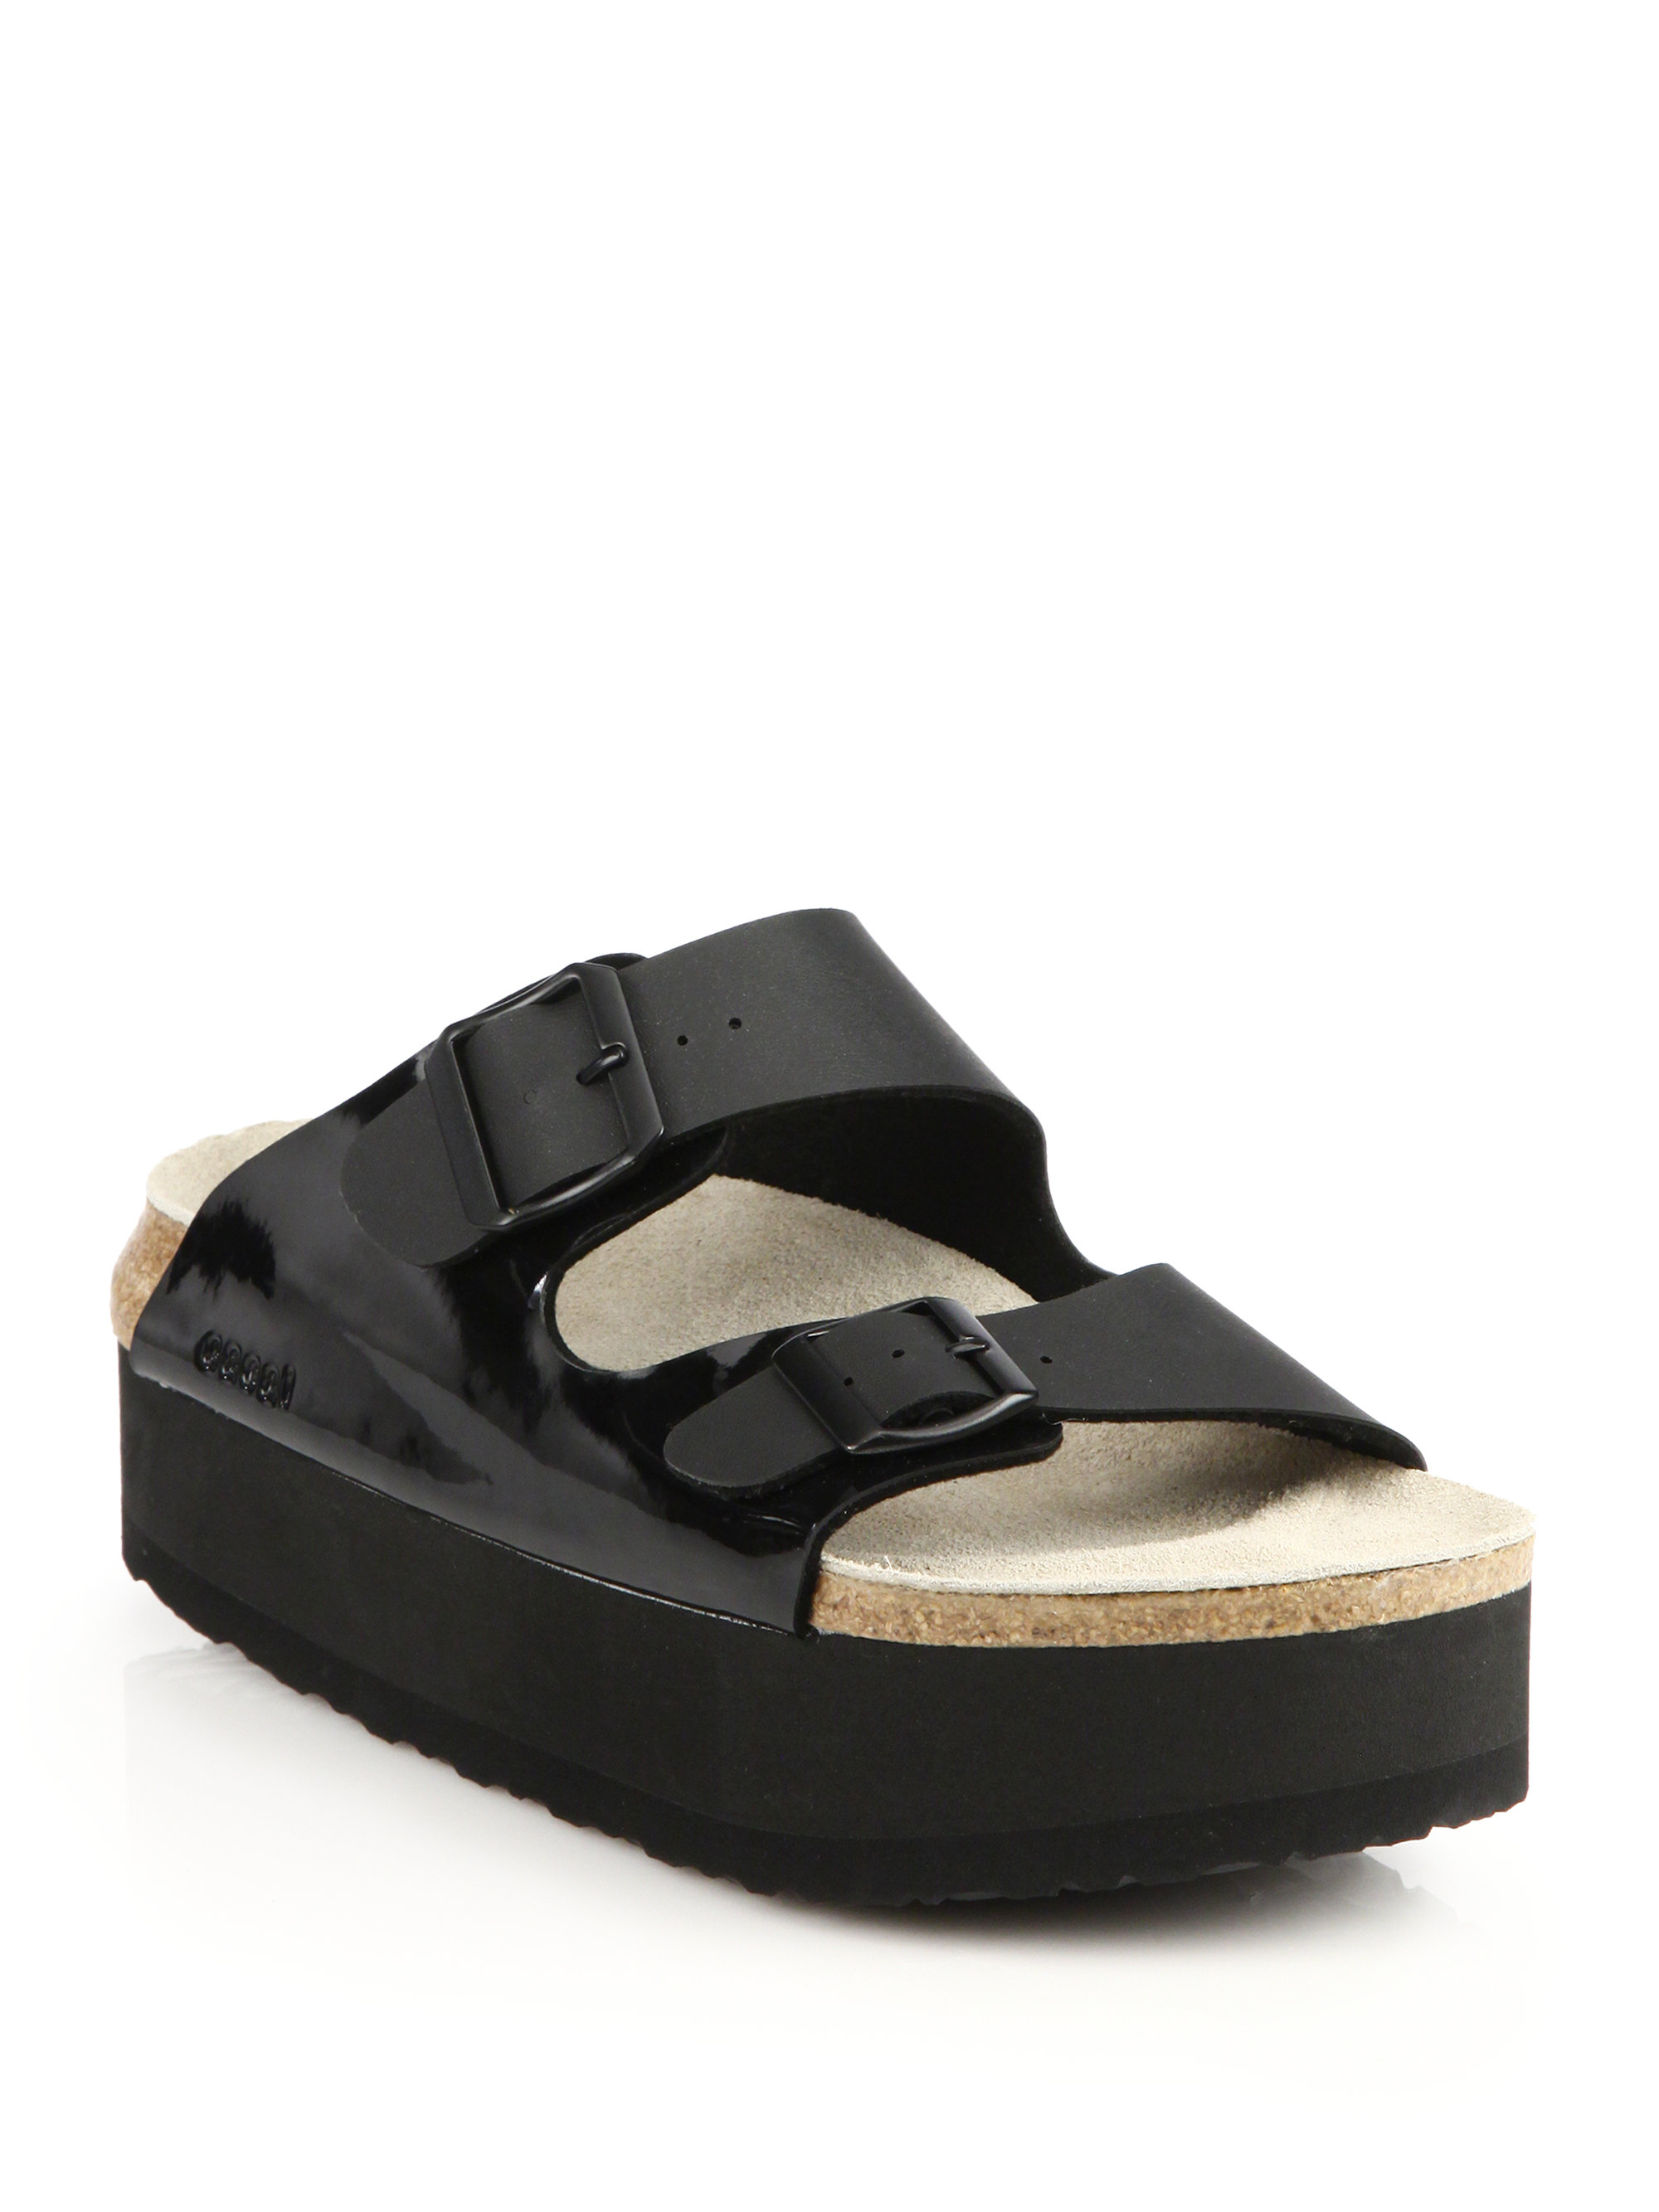 Sacai Leather & Patent Leather Platform Slide Sandals in Black | Lyst